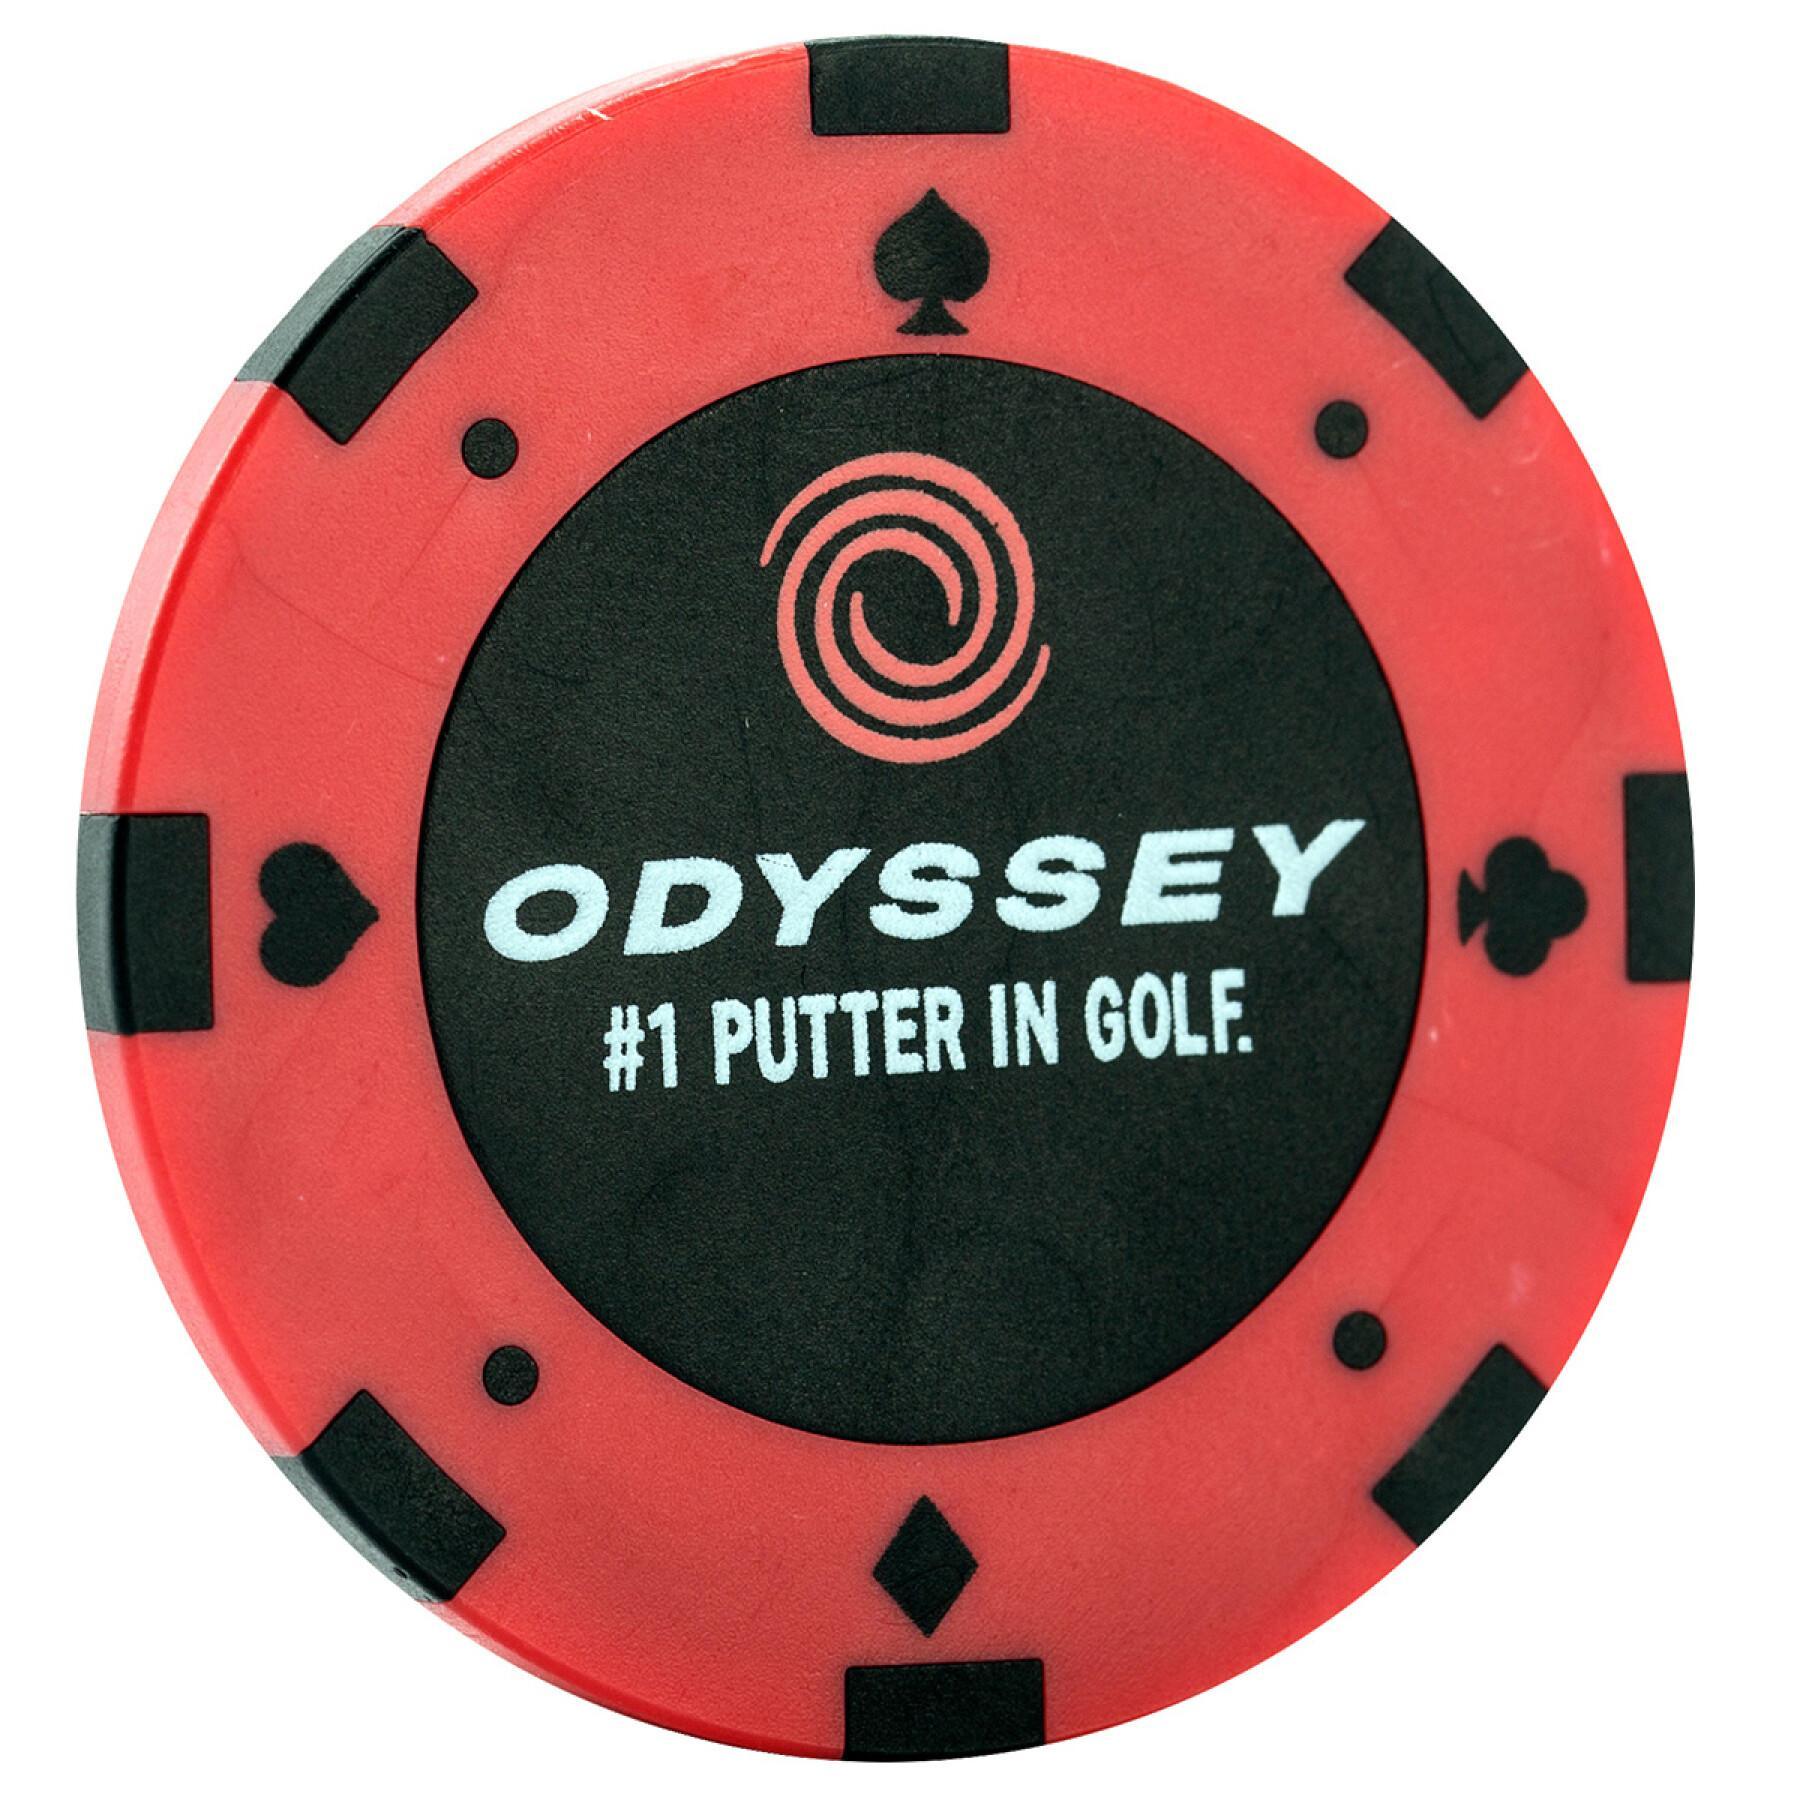 Golfball-Marker Callaway odyssey poker chip